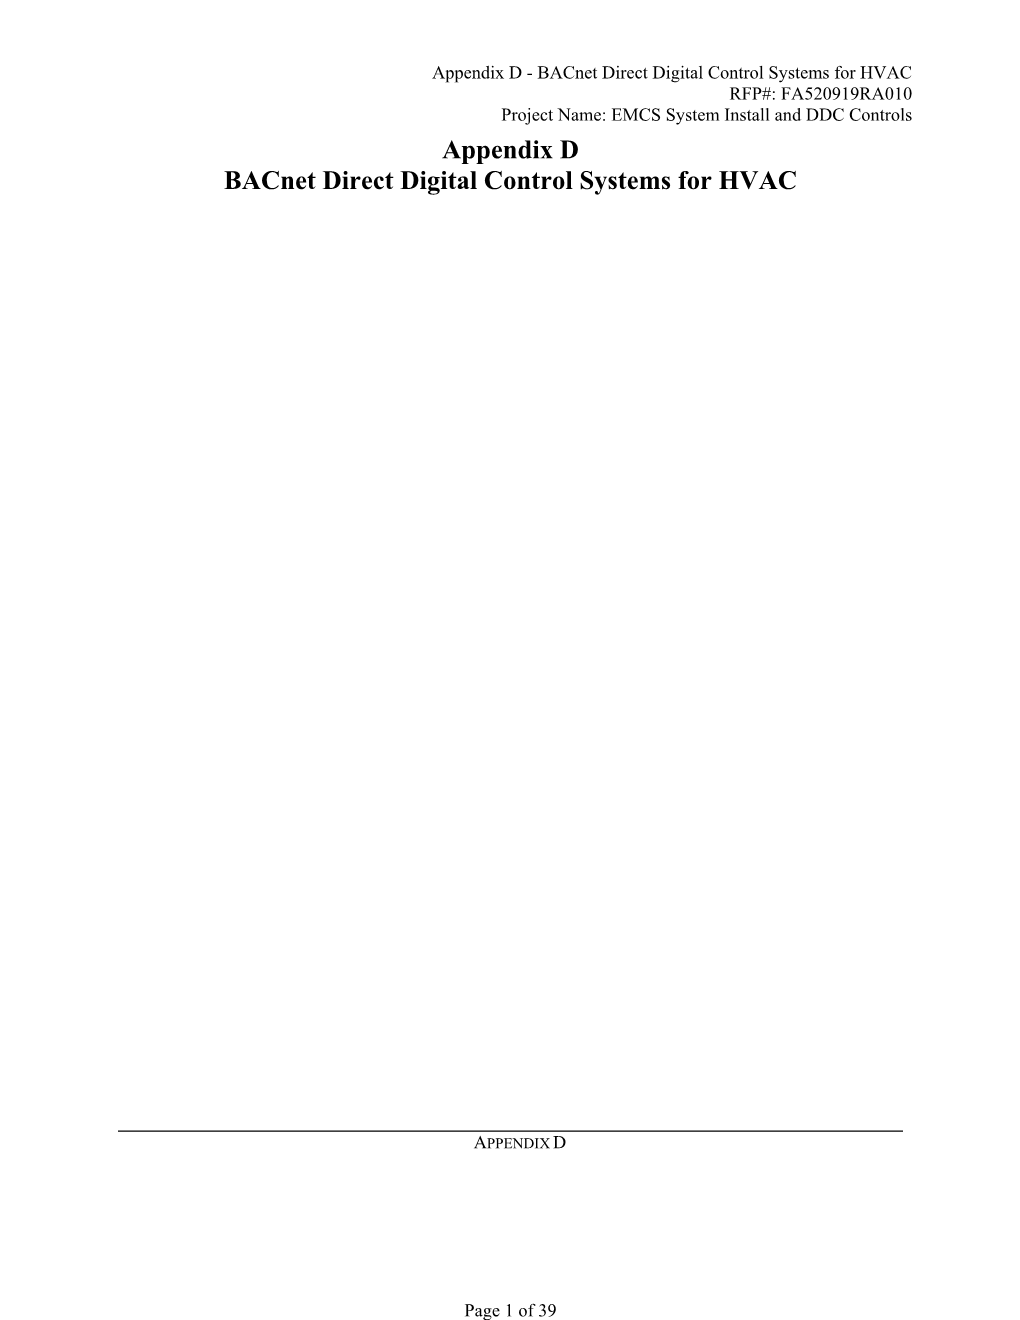 Appendix D Bacnet Direct Digital Control Systems for HVAC